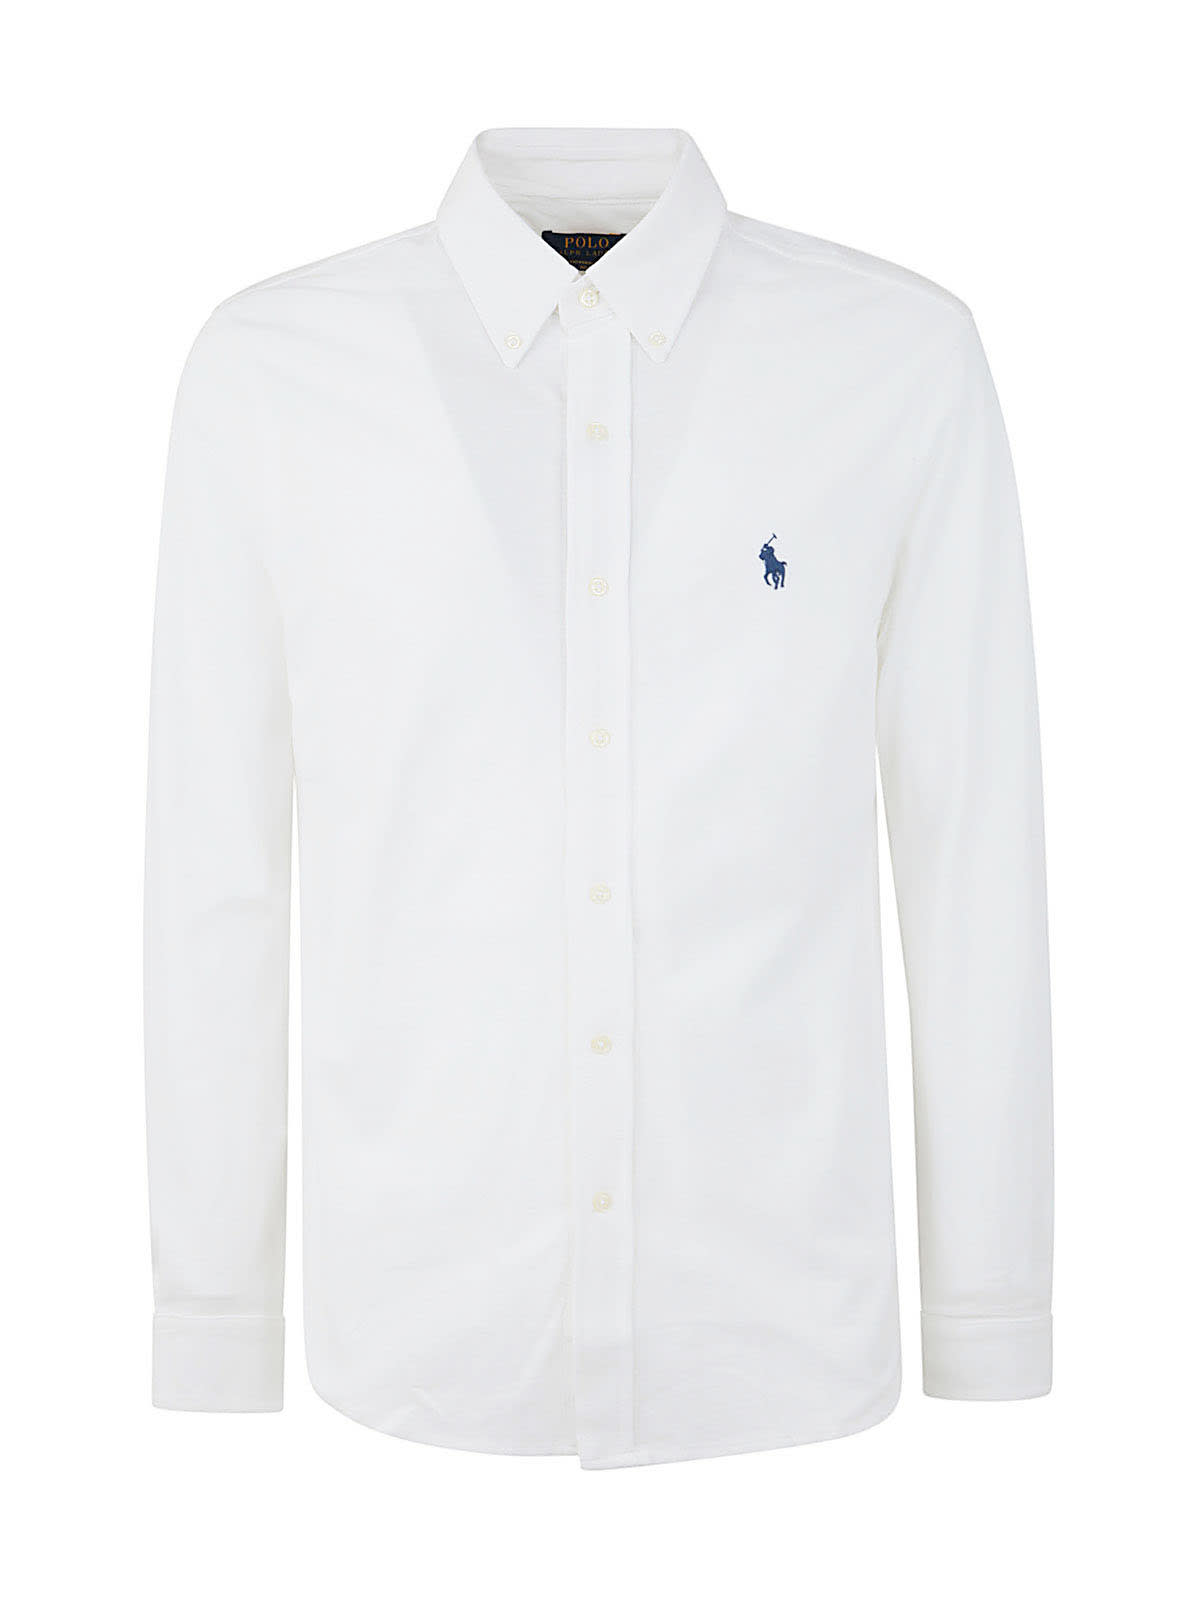 Shop Polo Ralph Lauren Lsfbbdm5 Long Sleeve Knit In White